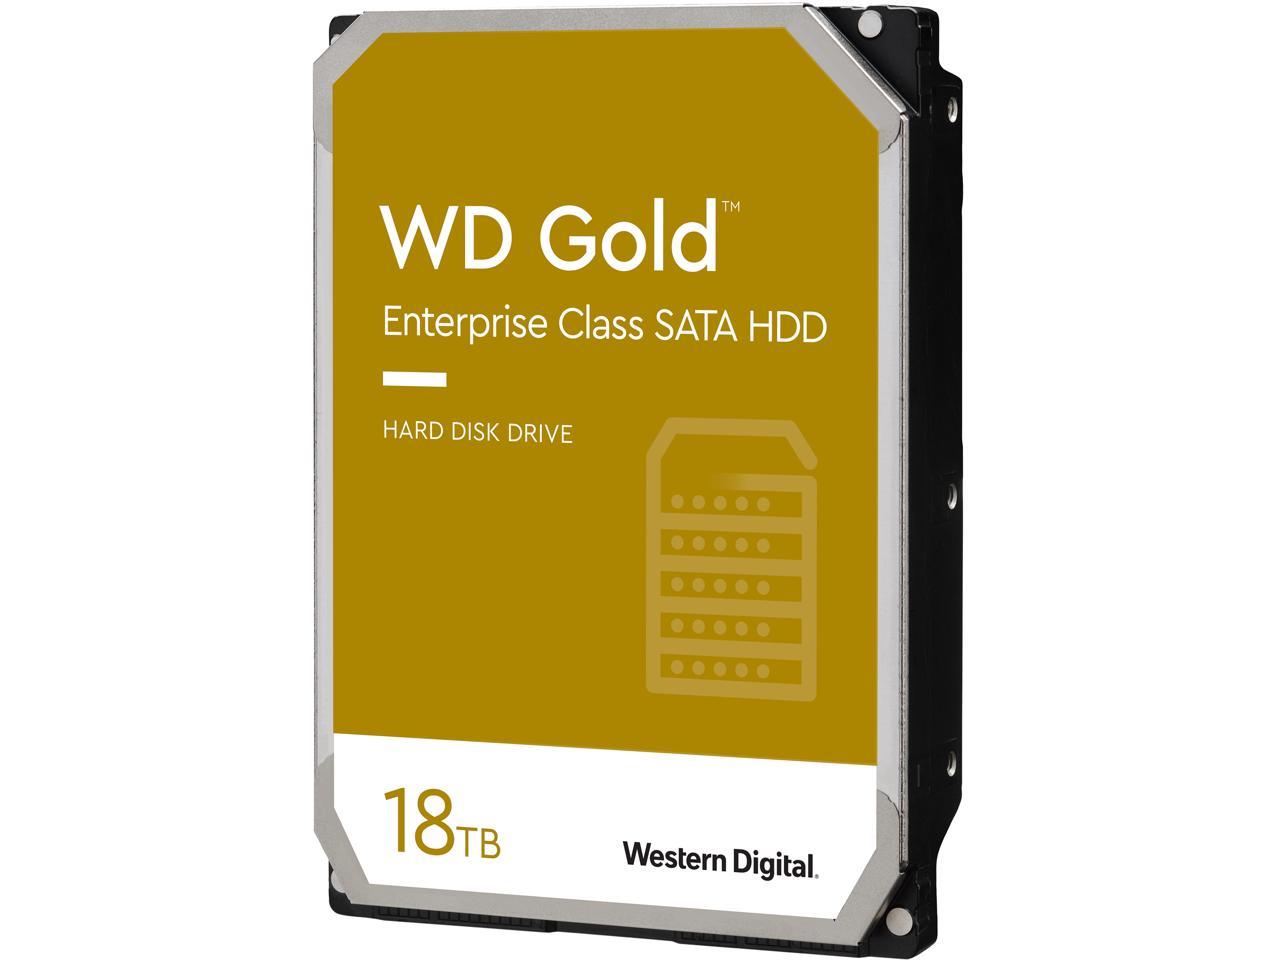 18TB Western Digital WD Gold Enterprise Class 3.5" 7200 RPM Hard Disk Drive $300 + Free Shipping